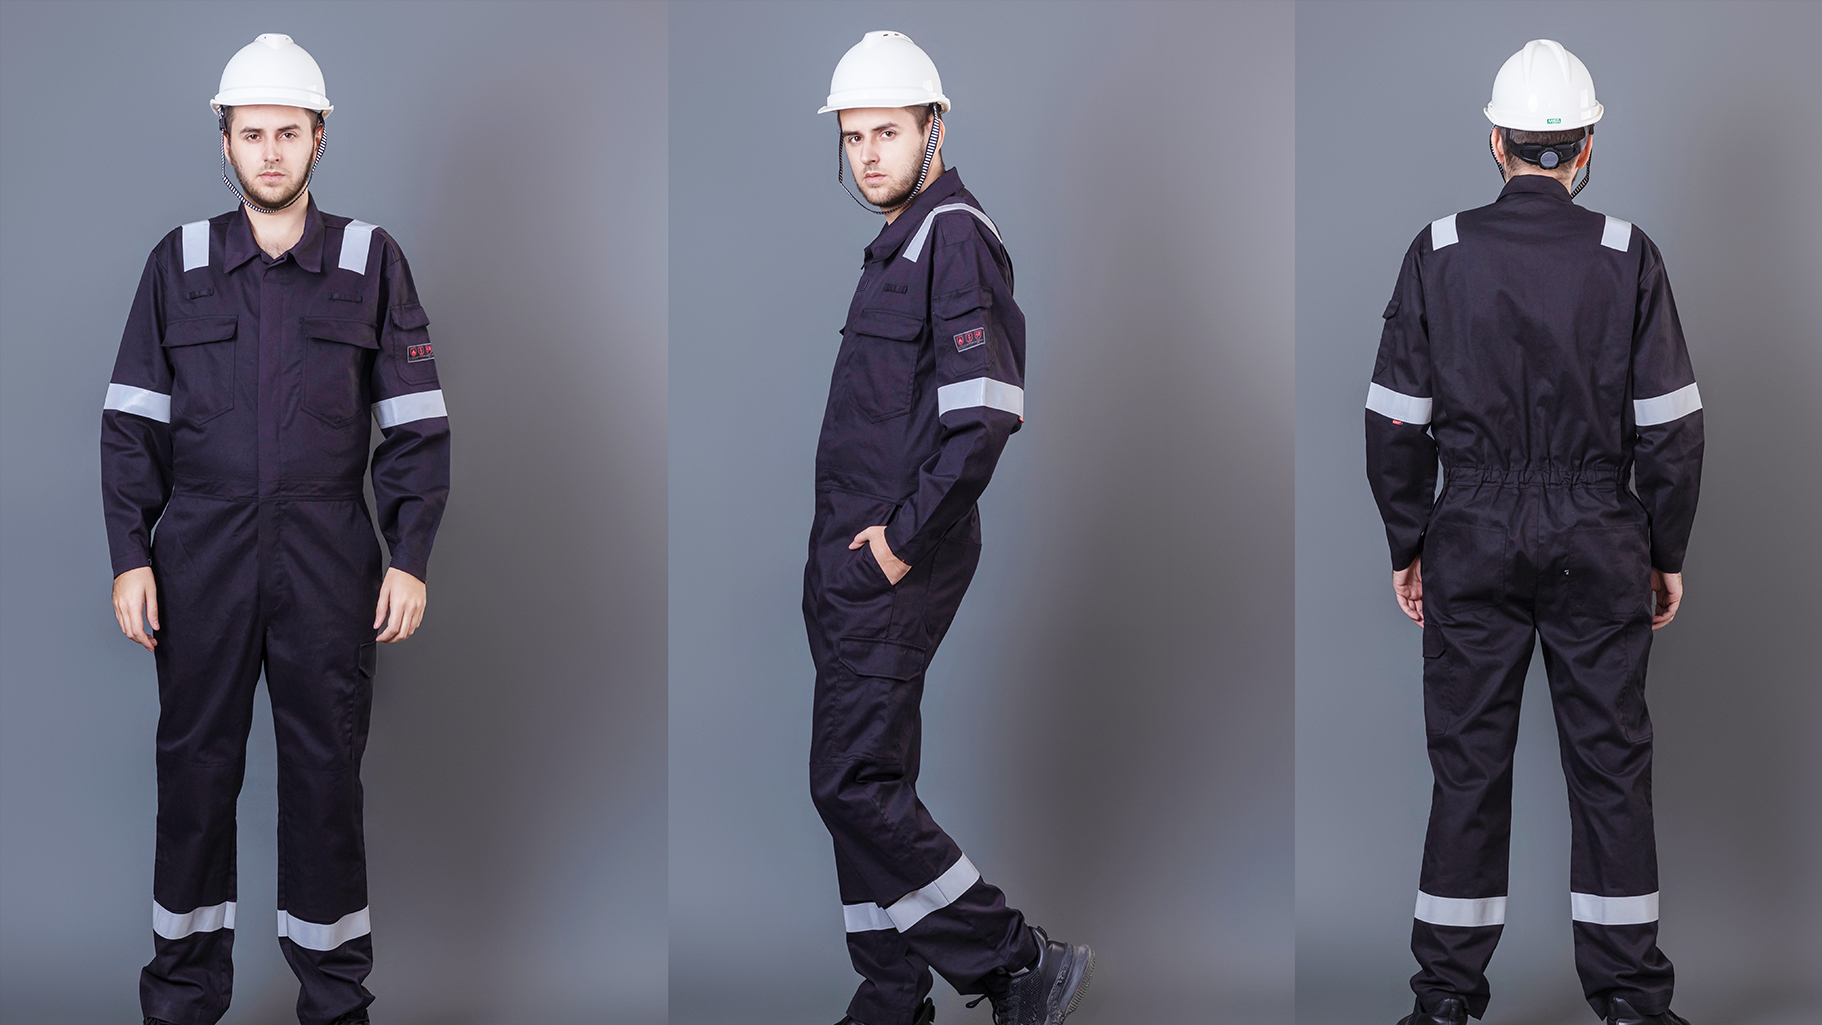 Uniforms Workwear Fire Retardant Clothing